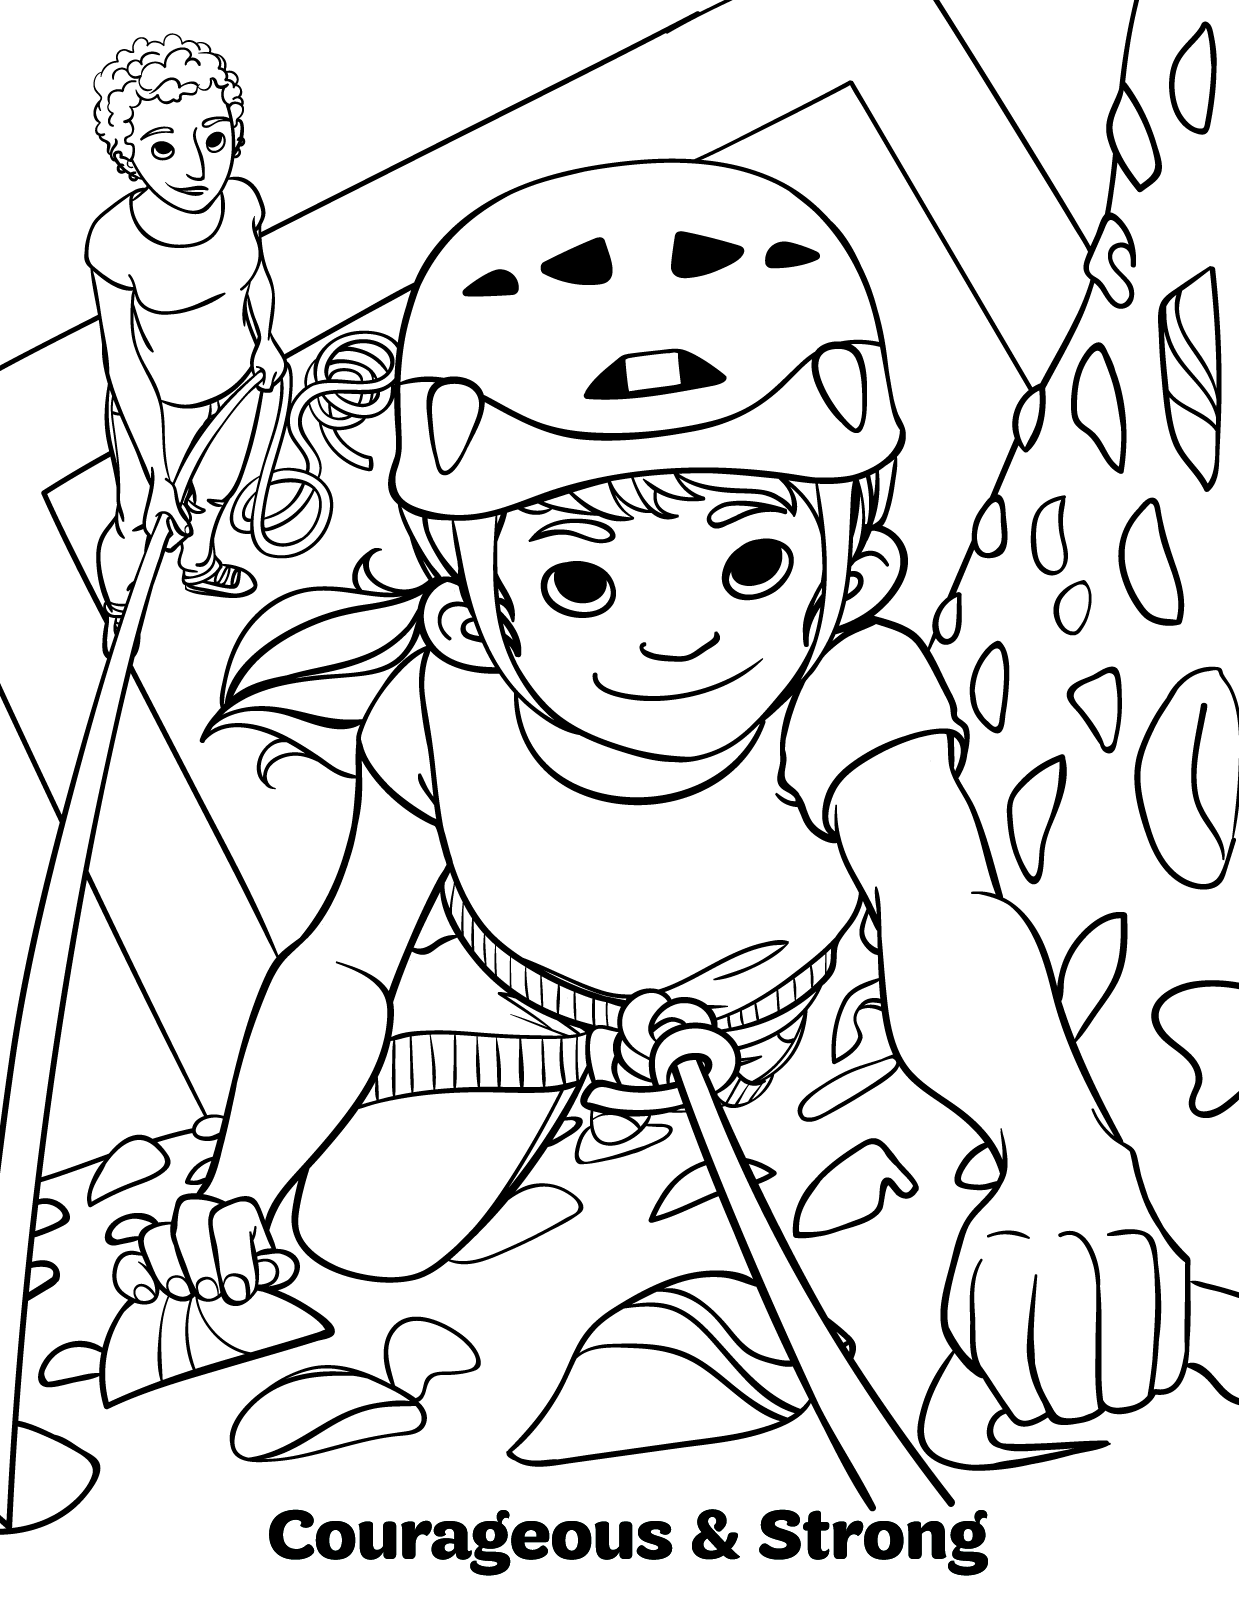 Girl scout coloring book â rachael olek illustration design